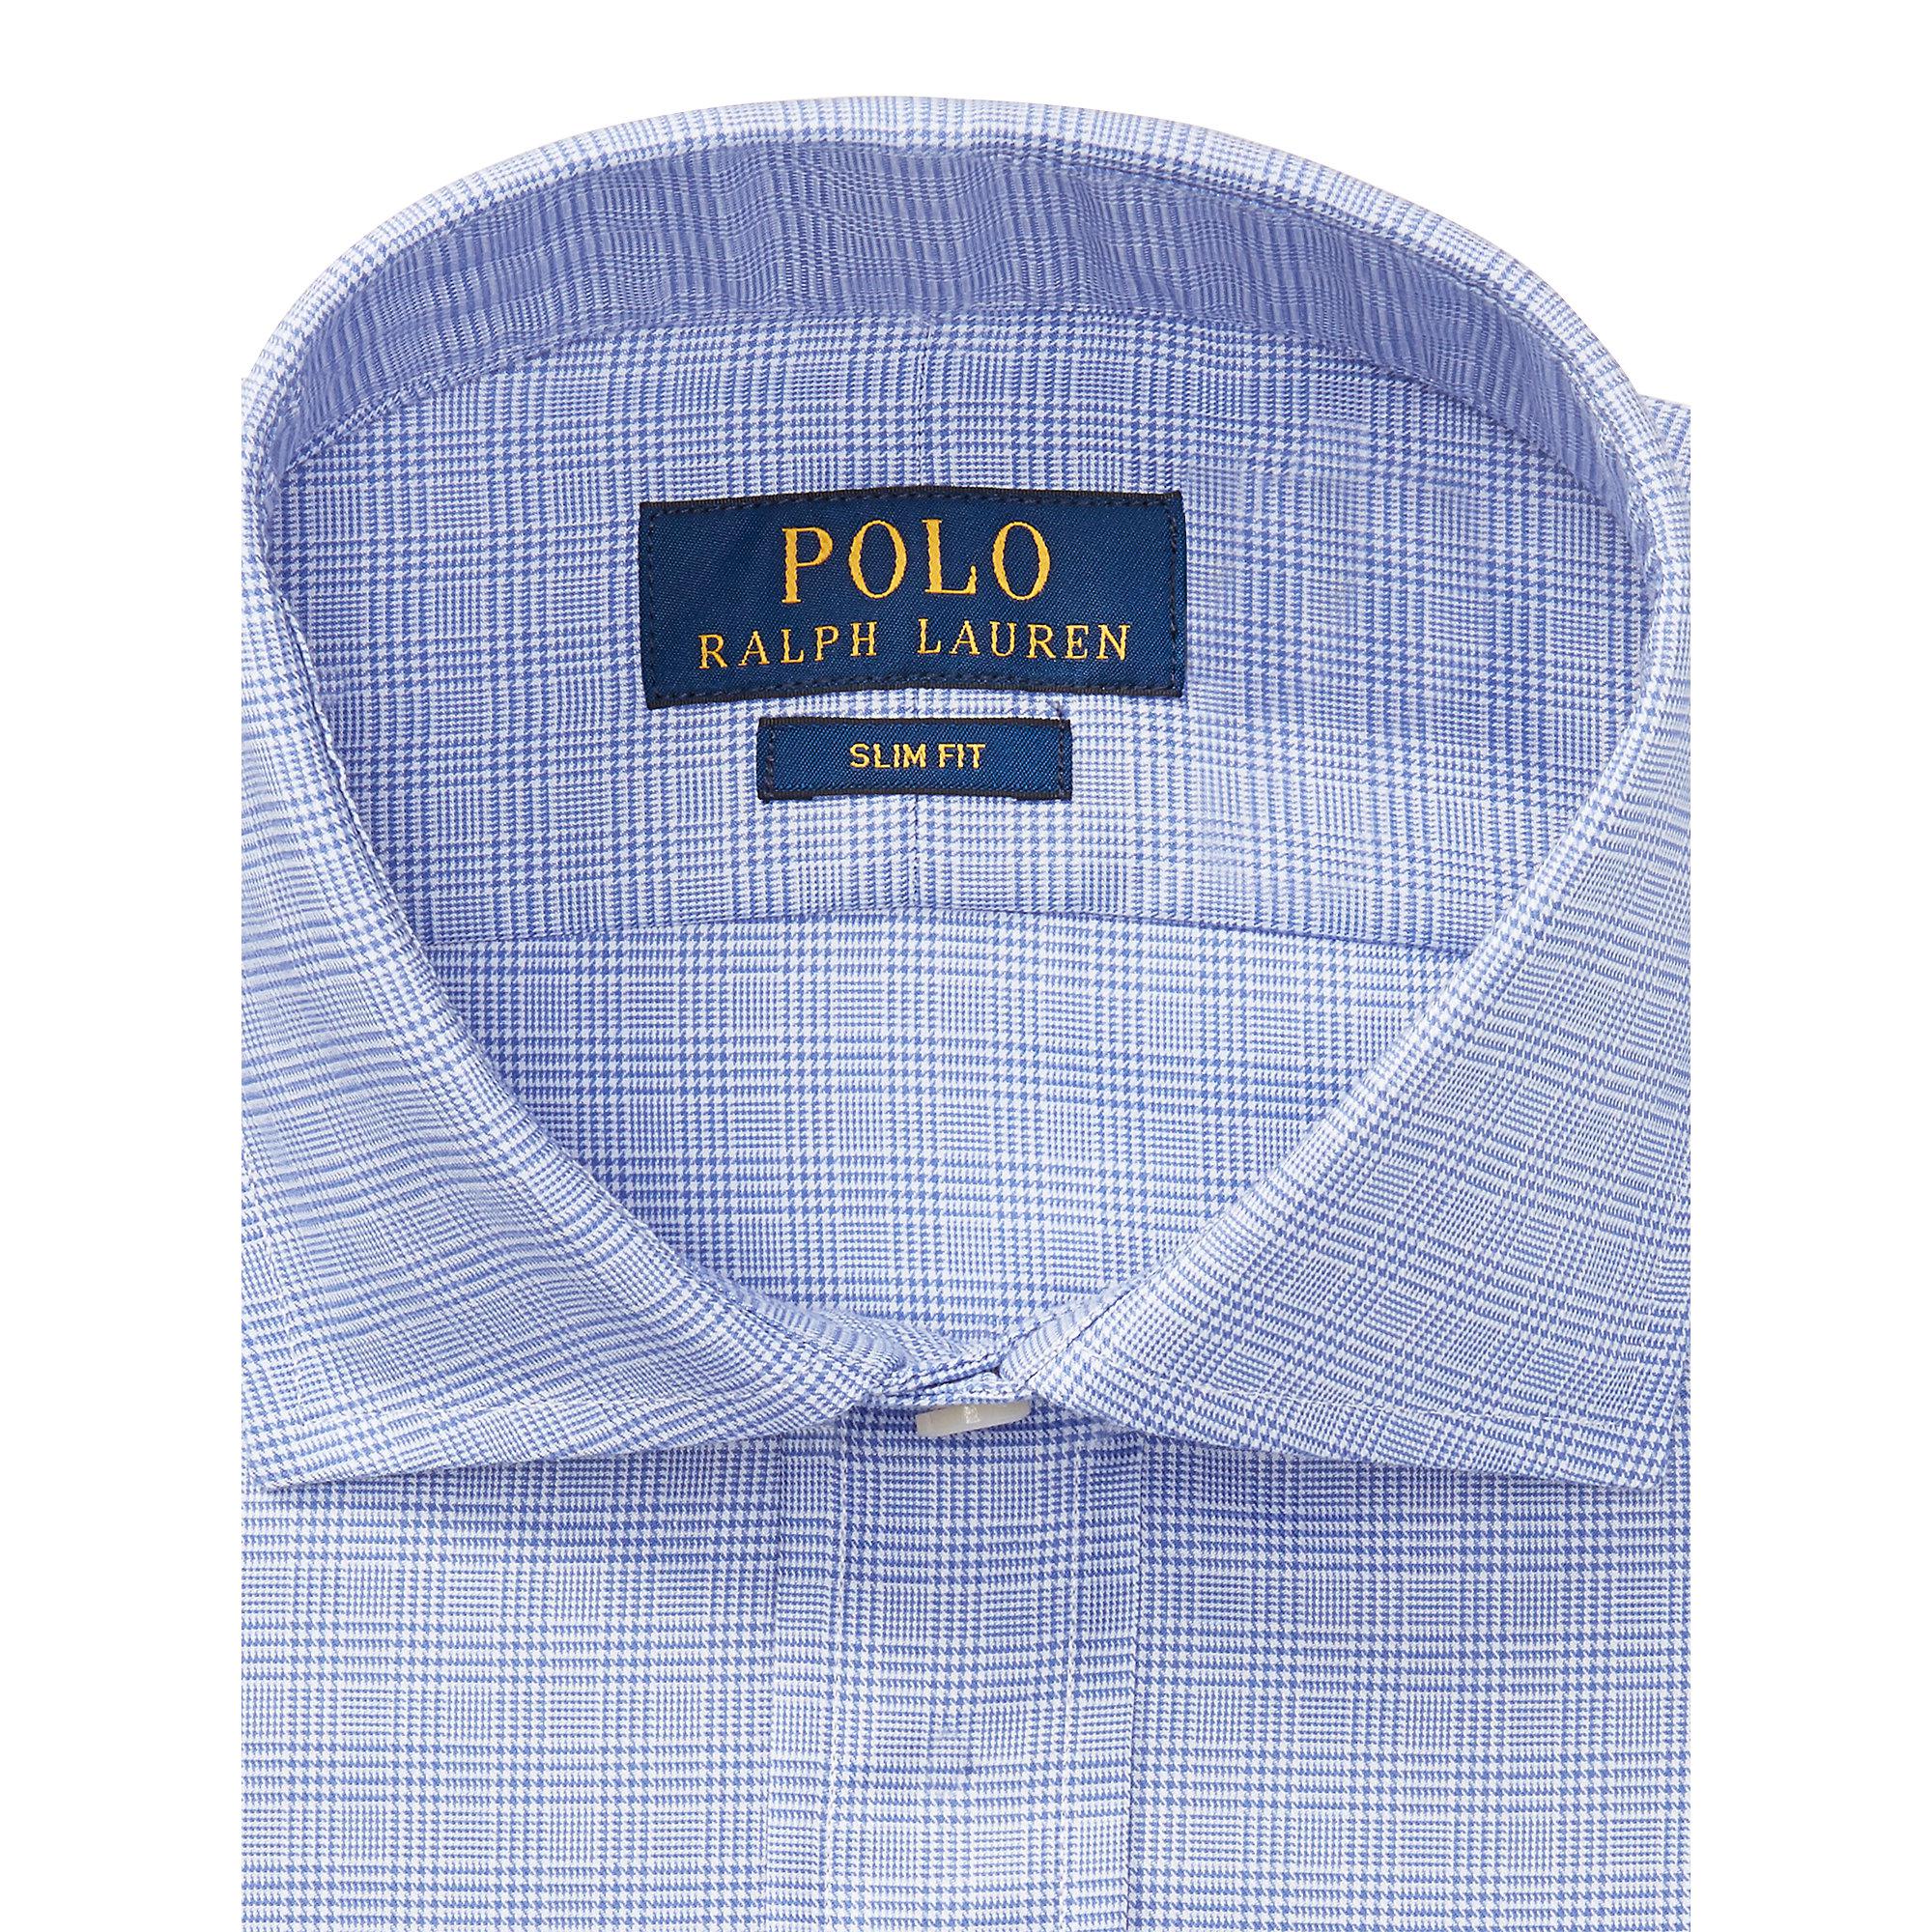 Lyst - Polo ralph lauren Slim Fit Cotton Dress Shirt in Blue for Men